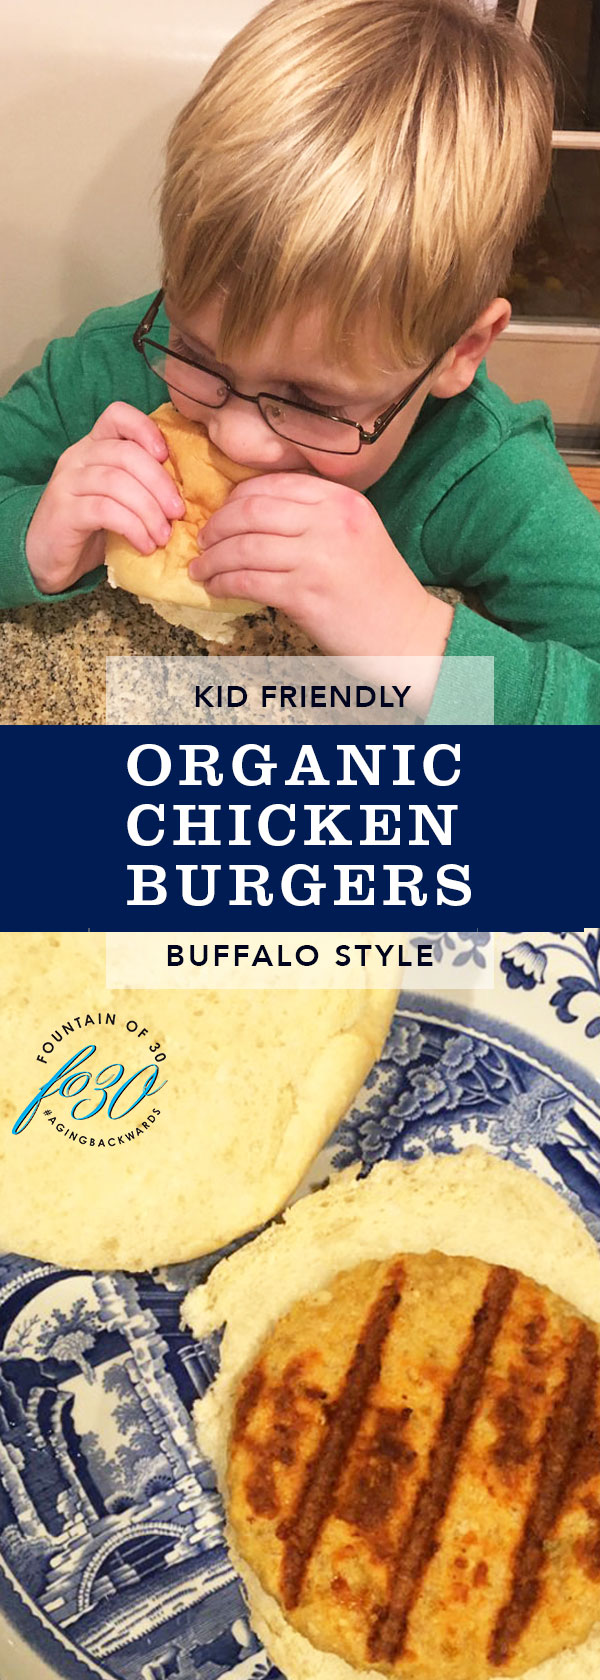 kid friendly organic chicken burgers buffalo style fountainof30